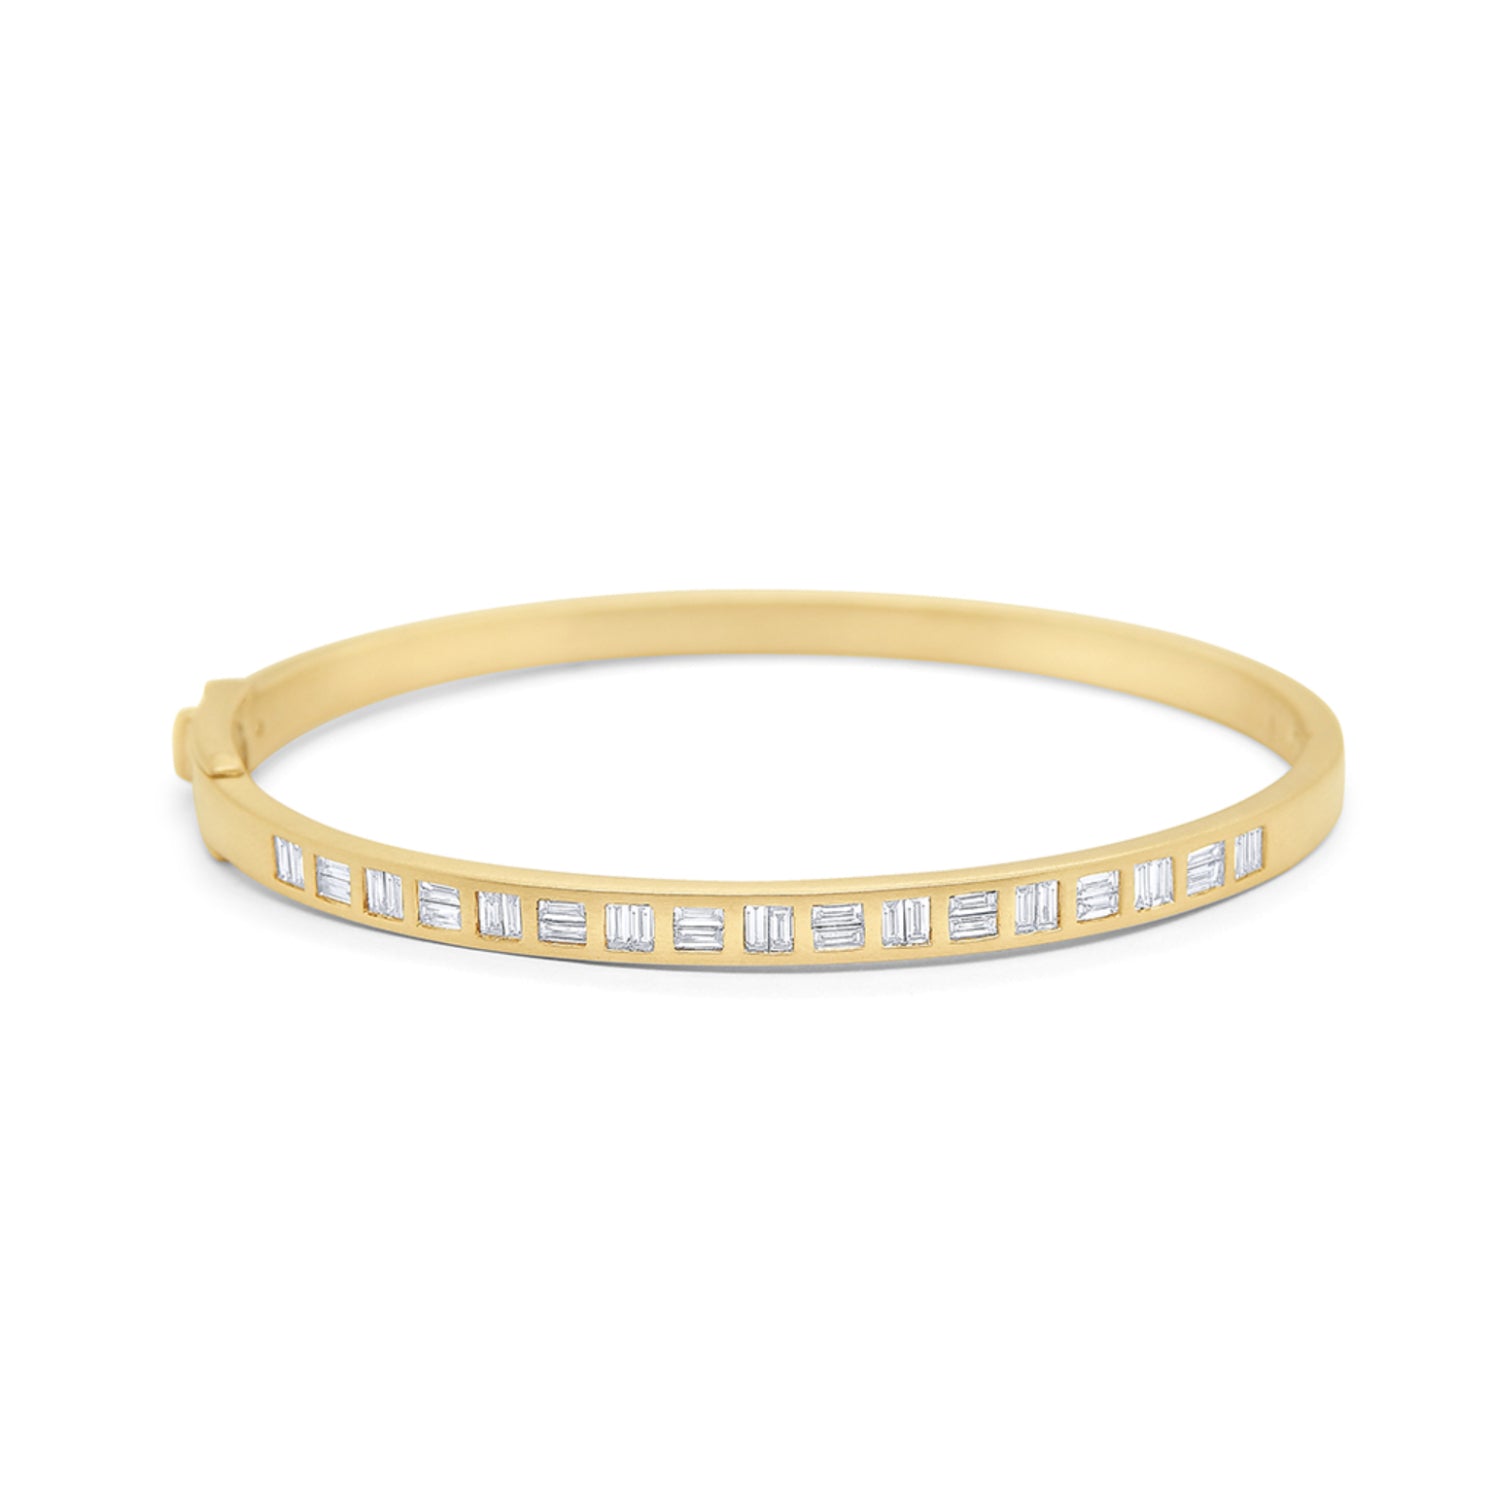 Baguette Cut Diamond Bangle Bracelet in Yellow Gold